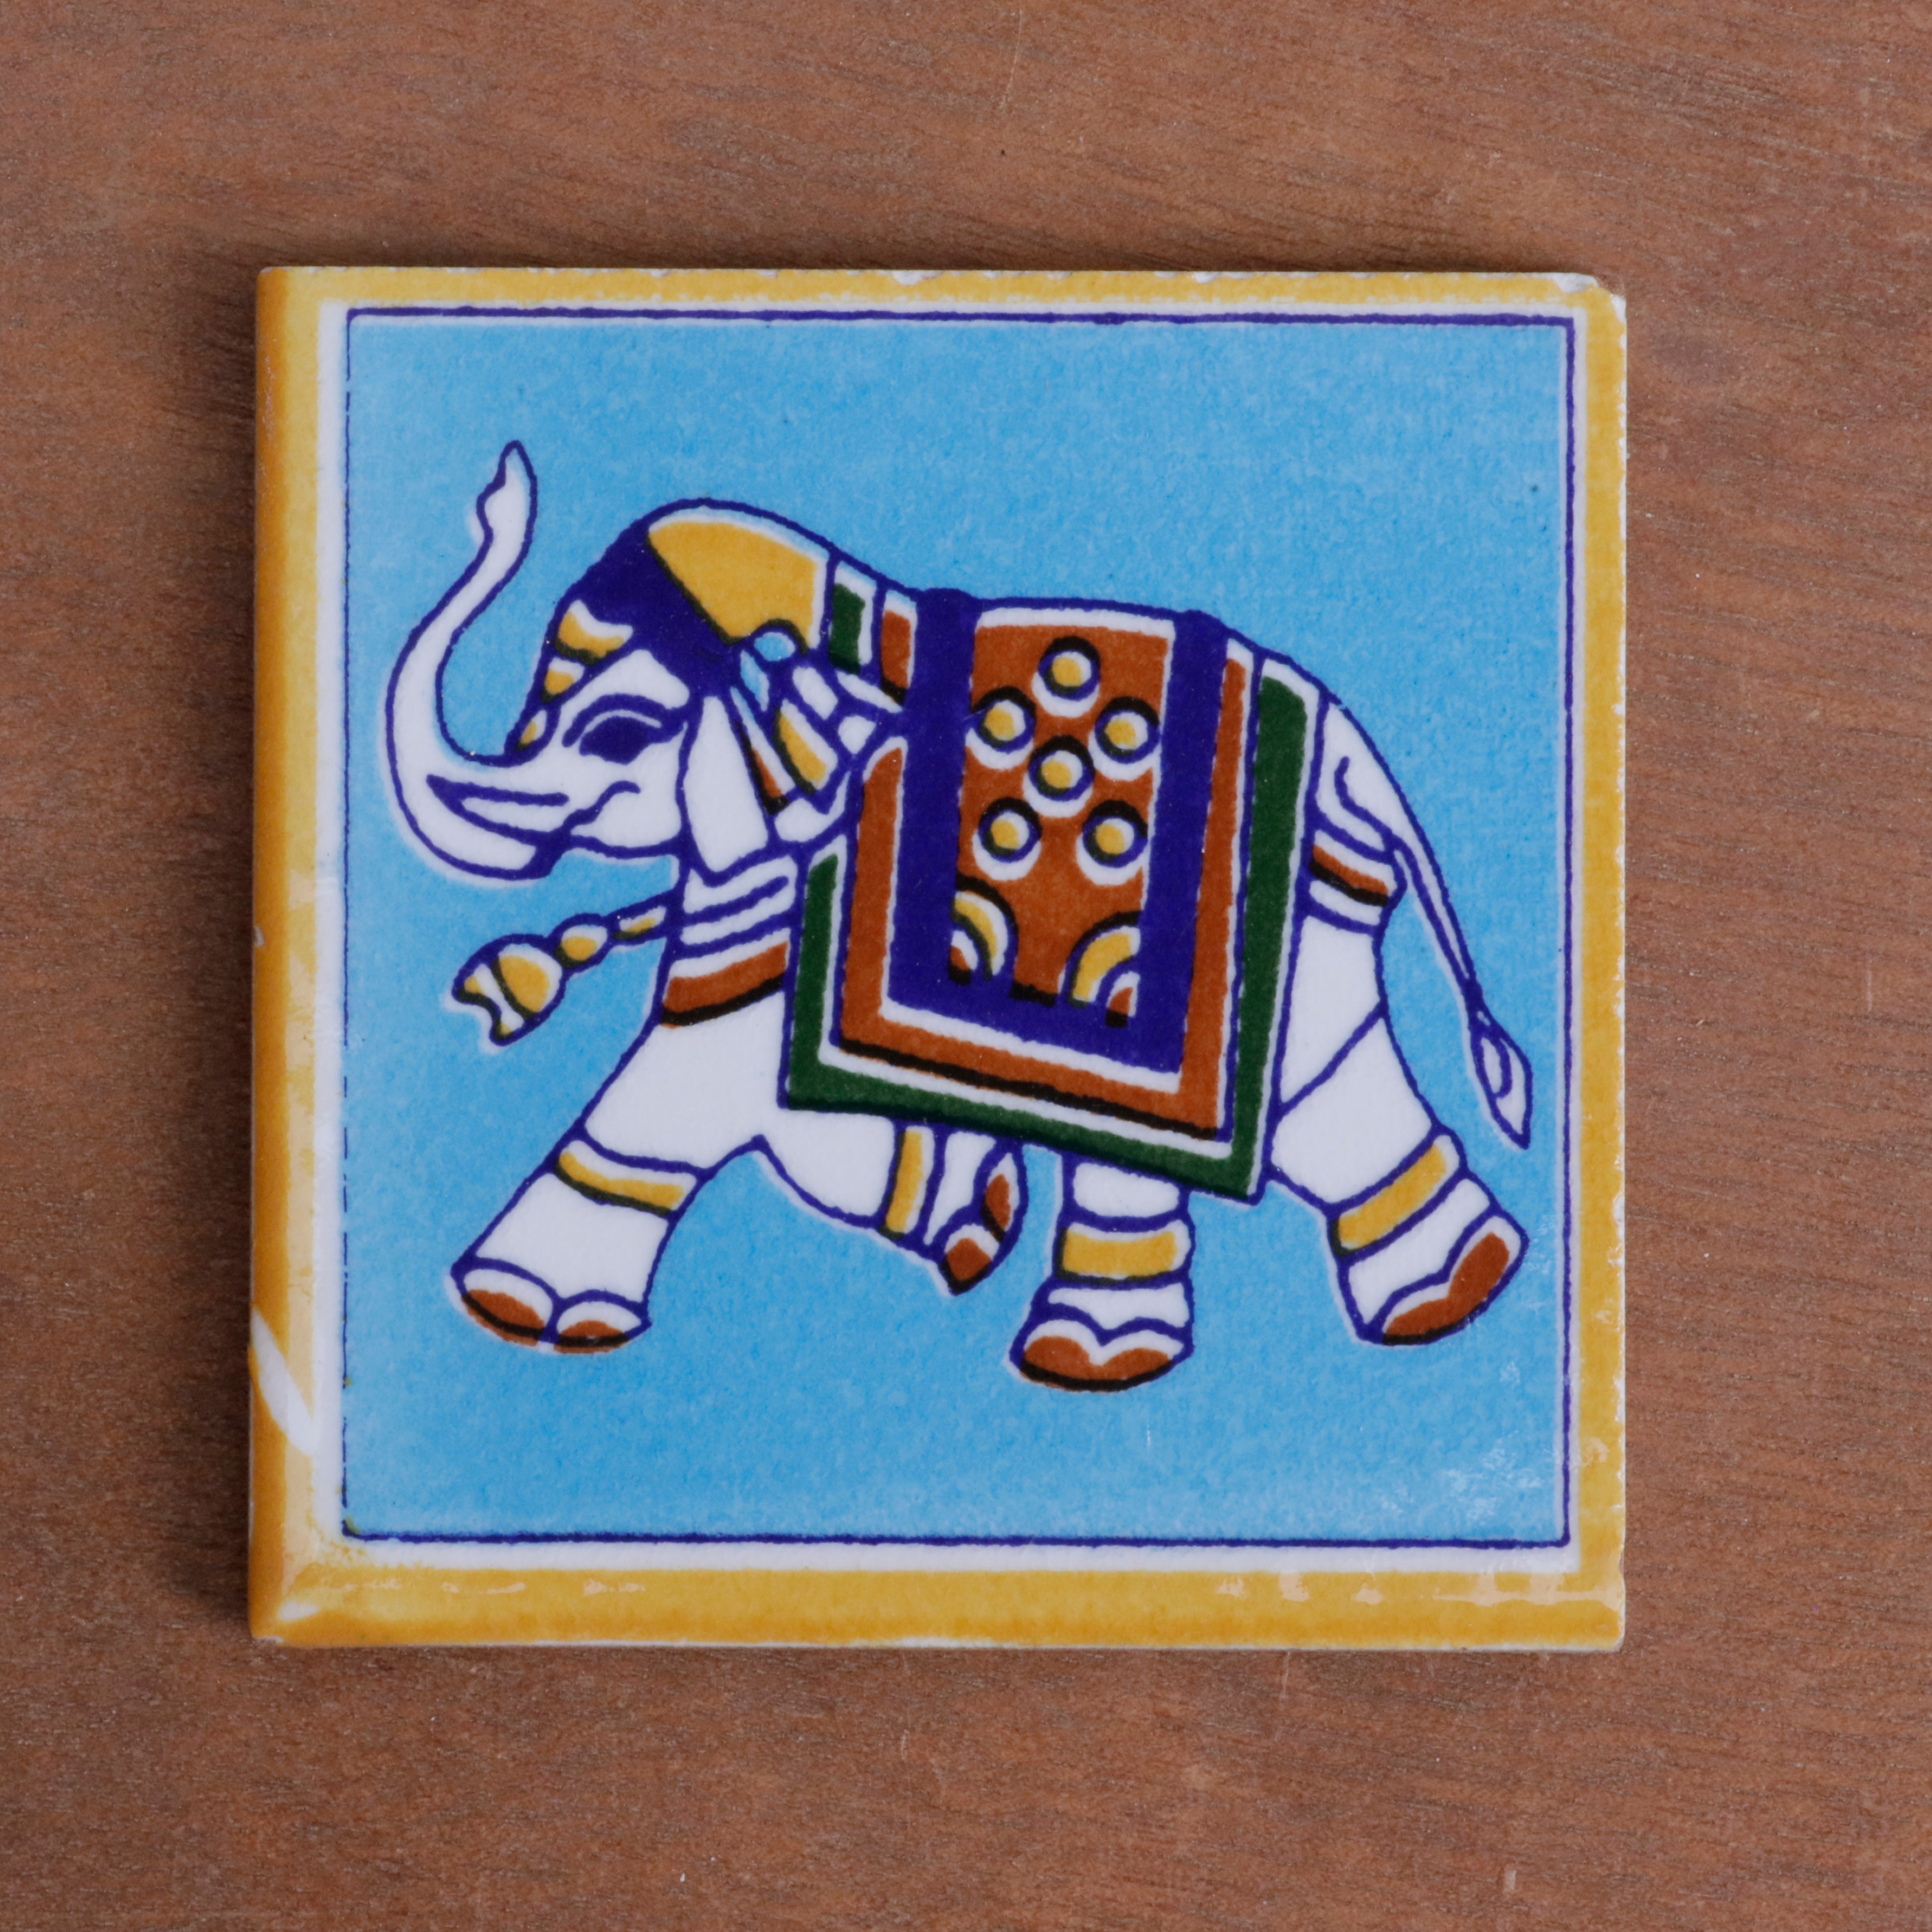 Unique Cultural Elephant Designed Ceramic Square Tile Set of 2 Ceramic Tile